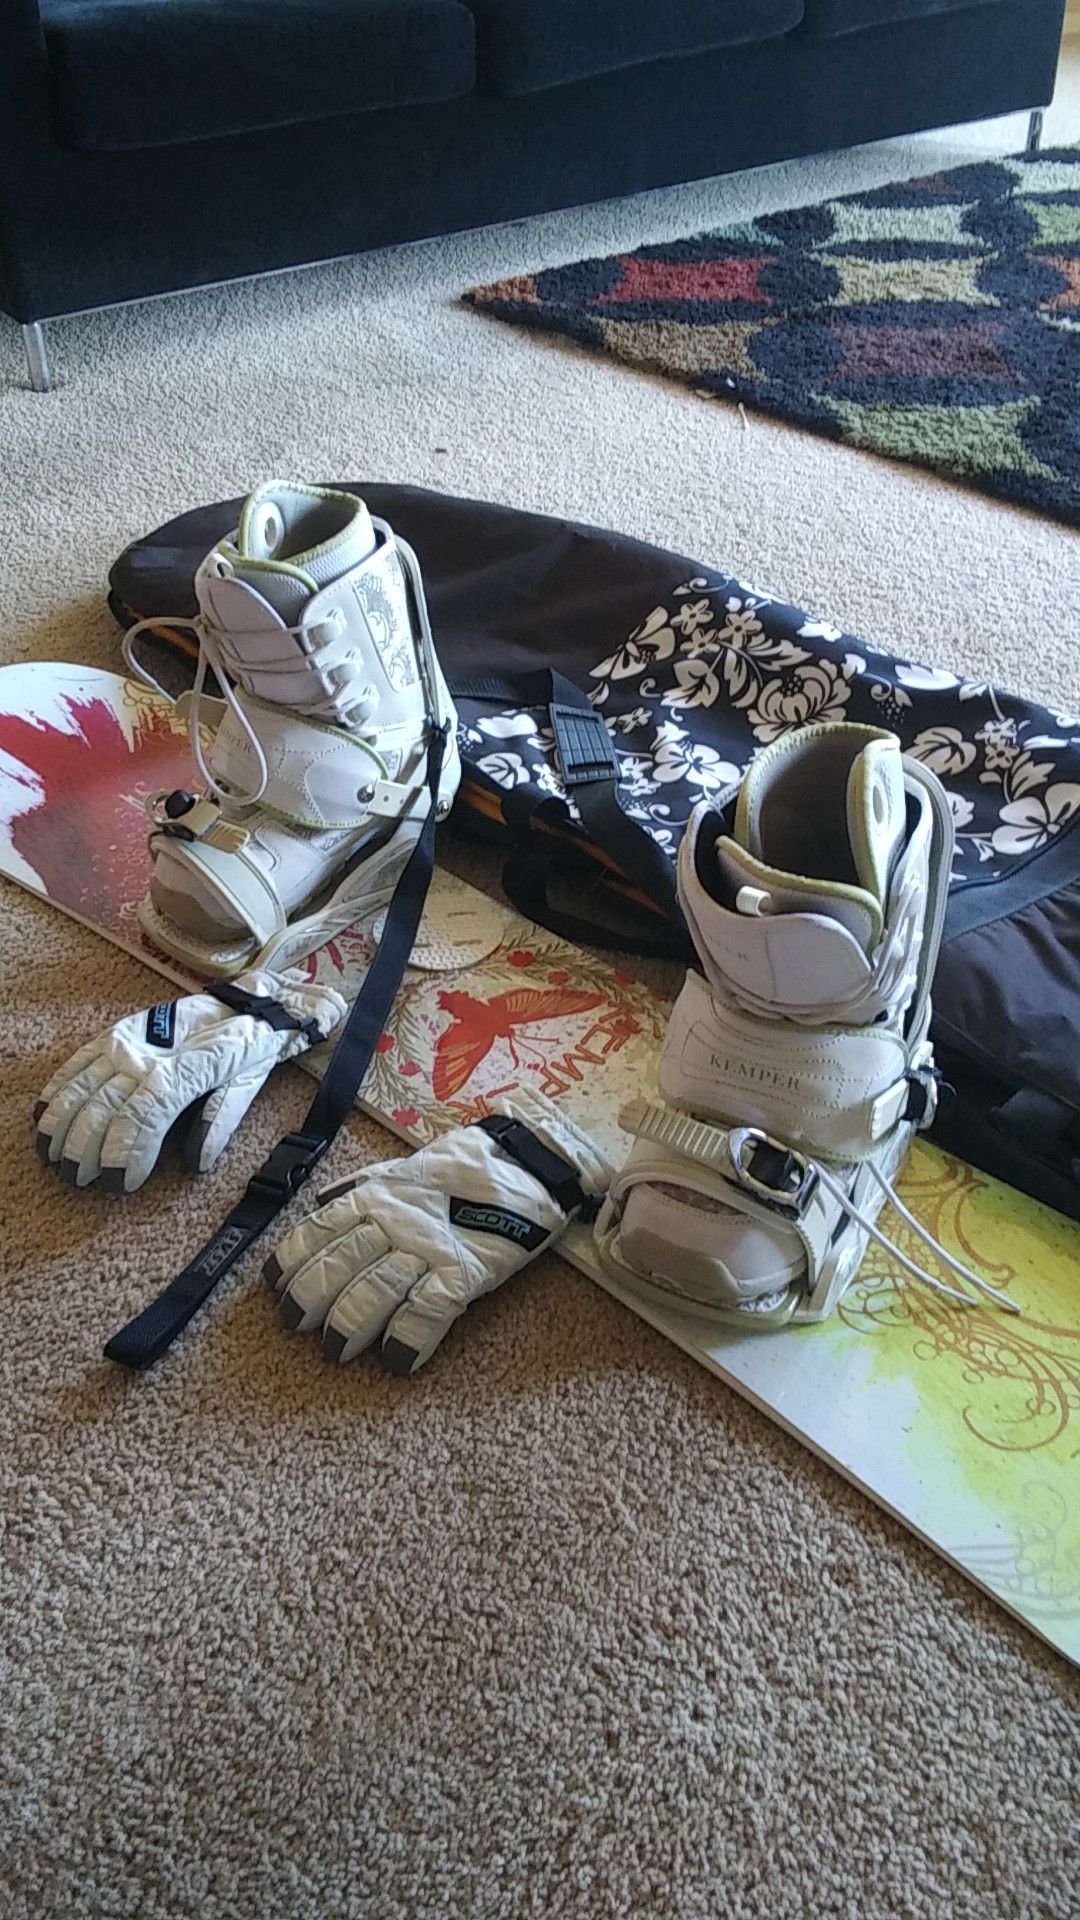 142cm Kemper Snowboard/ boots/ bindings